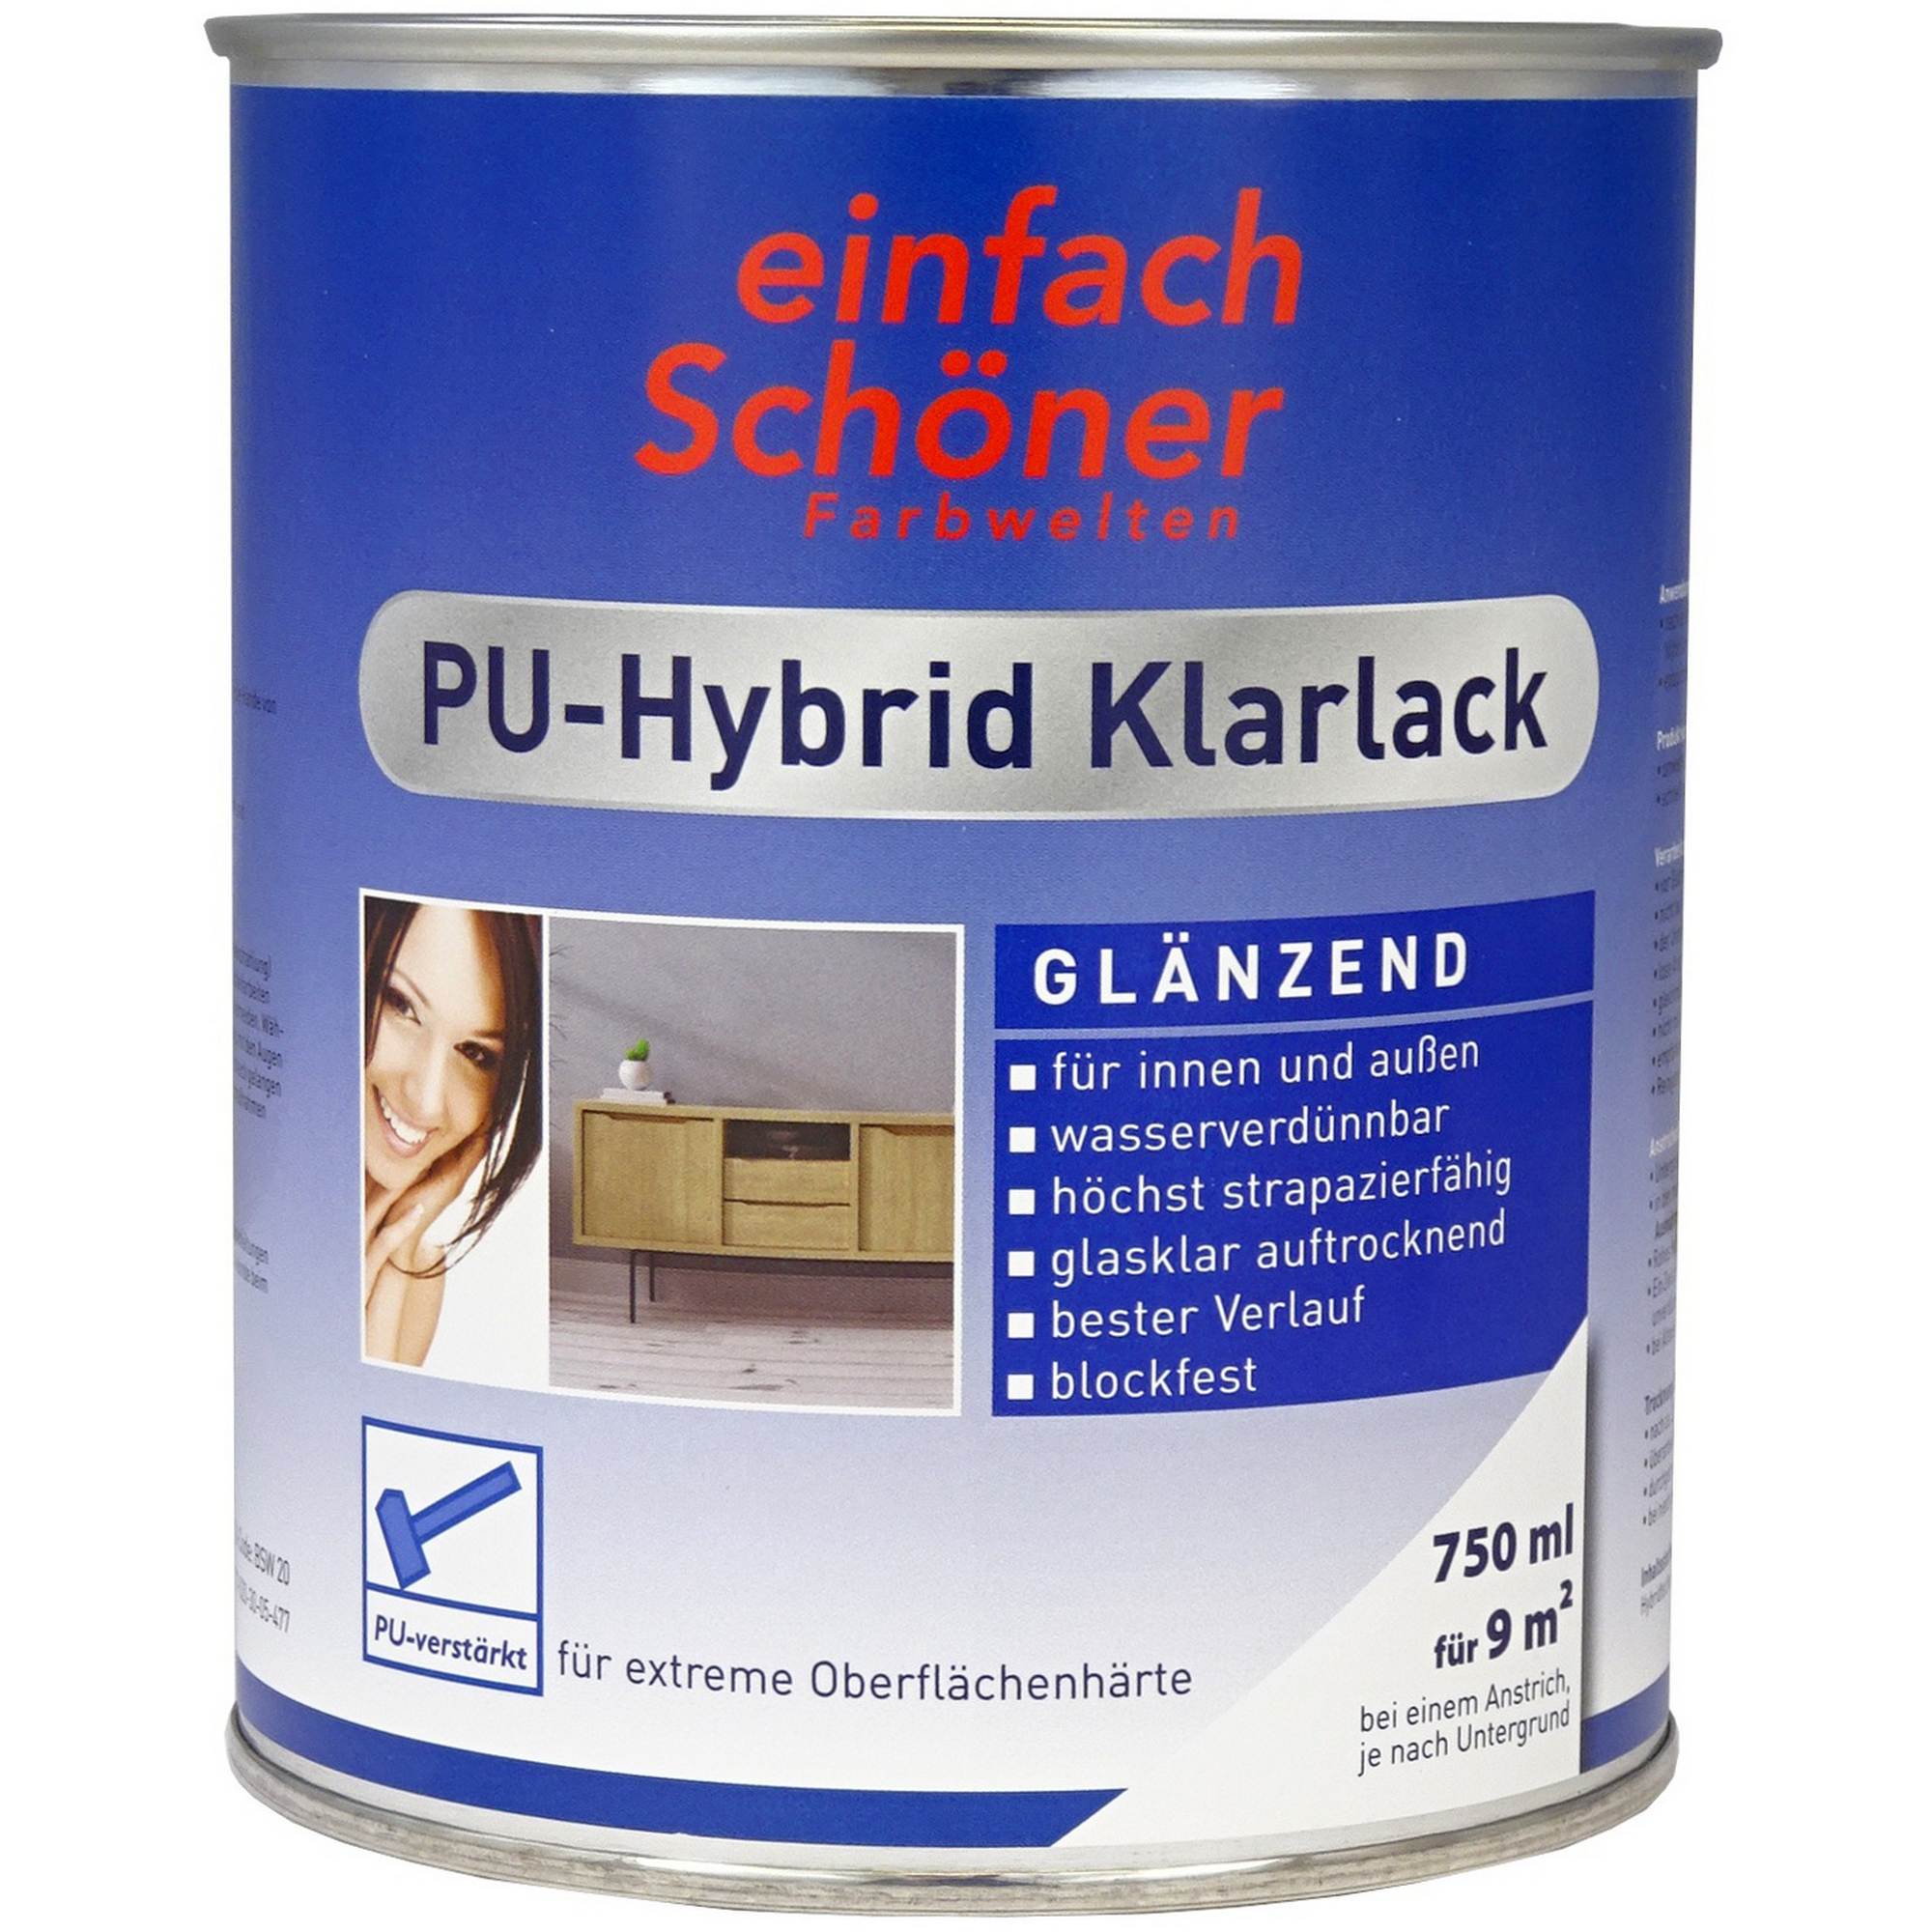 PU-Hybrid Klarlack glänzend 750 ml + product picture